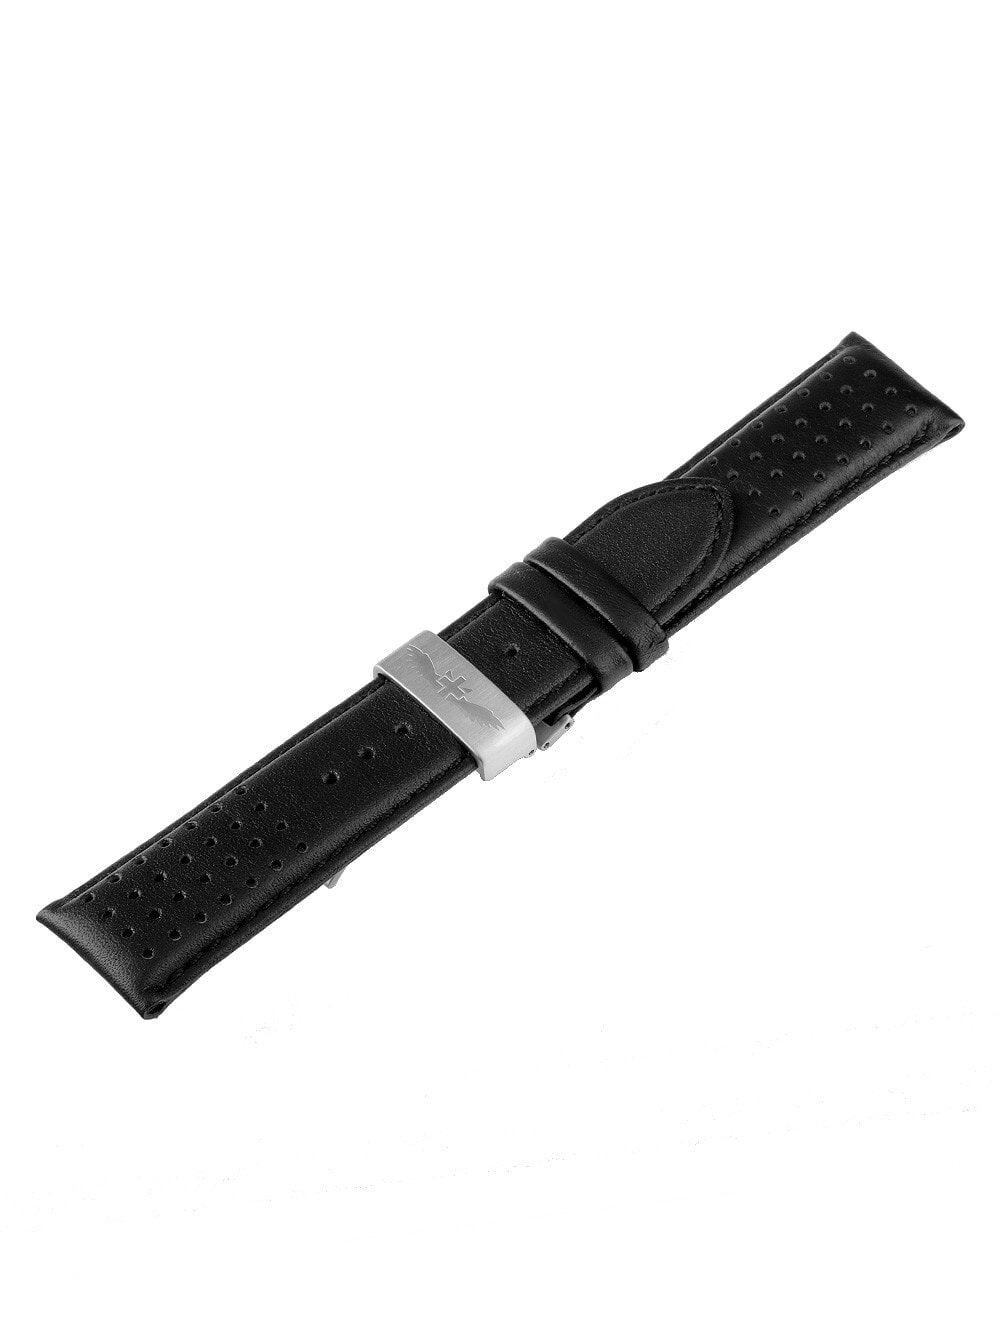 Ремешок или браслет для часов Watch strap Universal Replacement Strap [24 mm] black + silver Ref. 23833